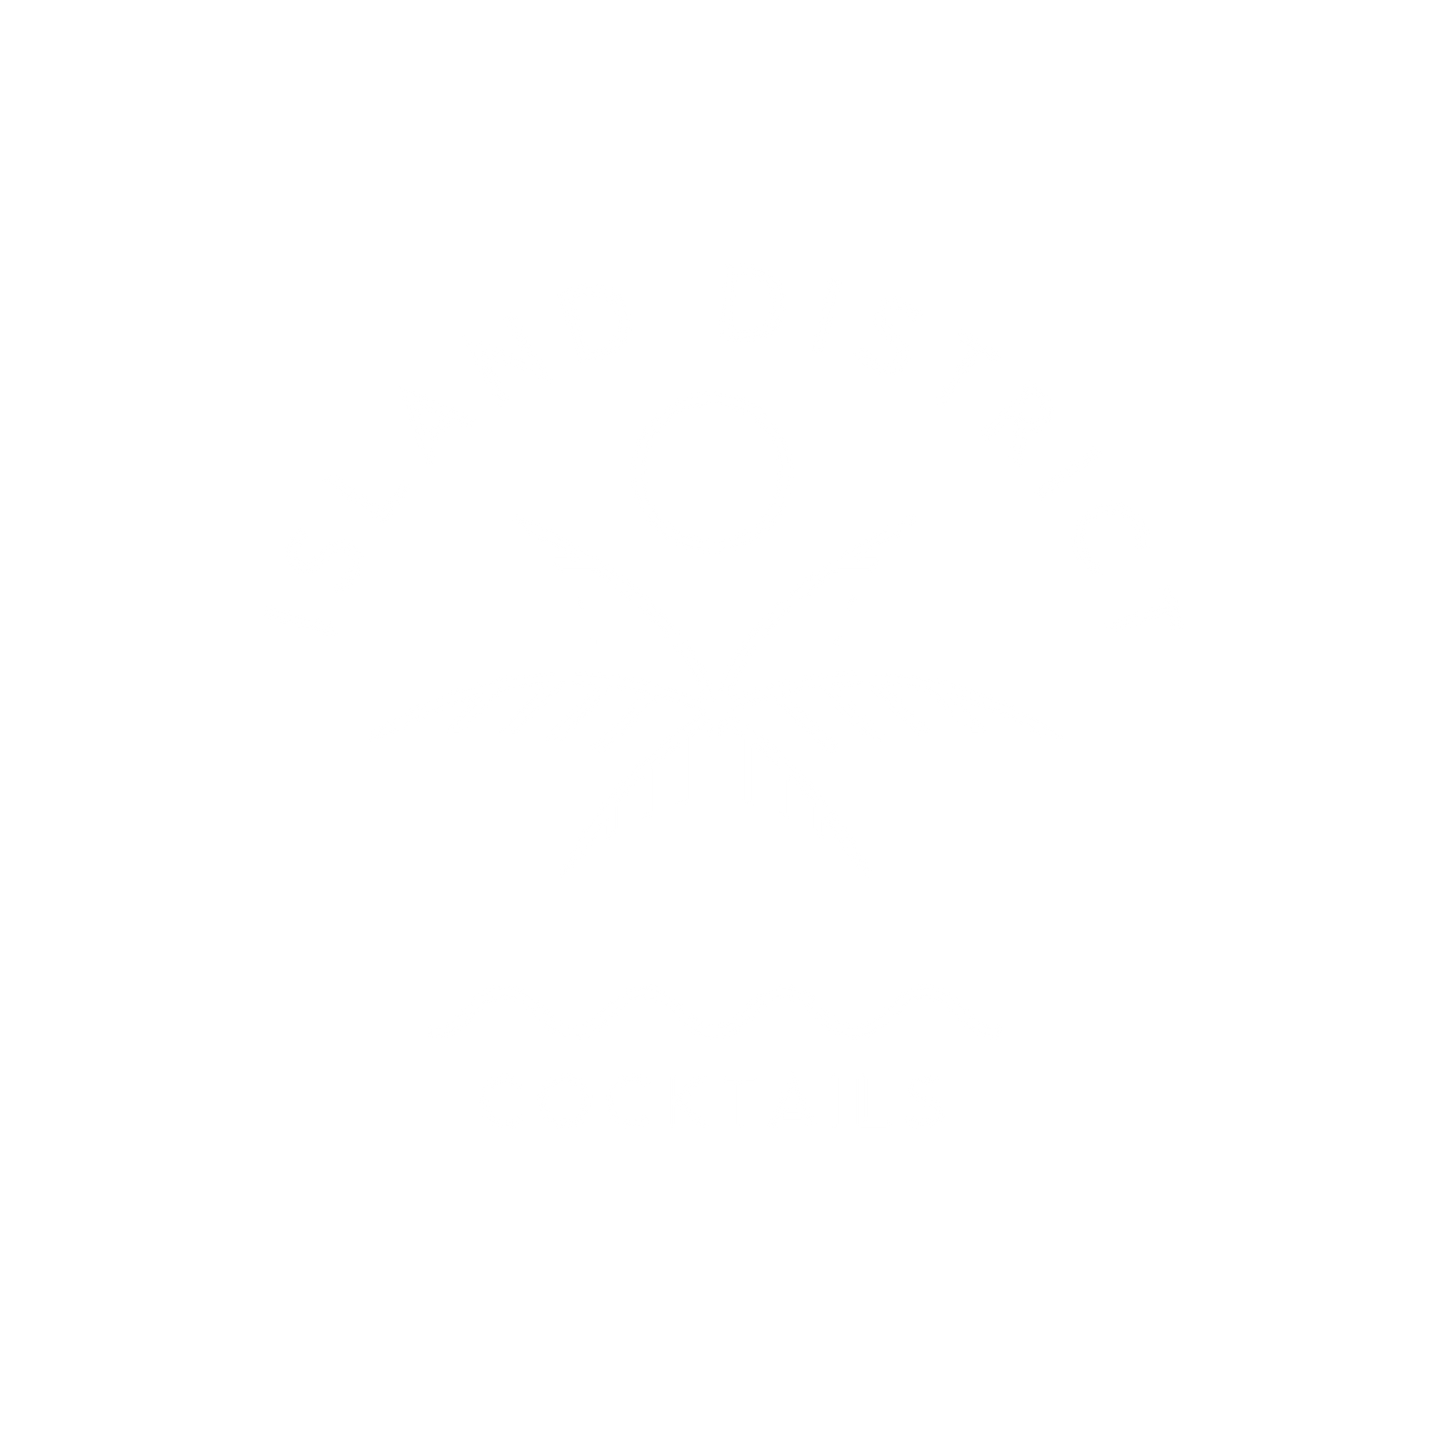 Island District Cocktails